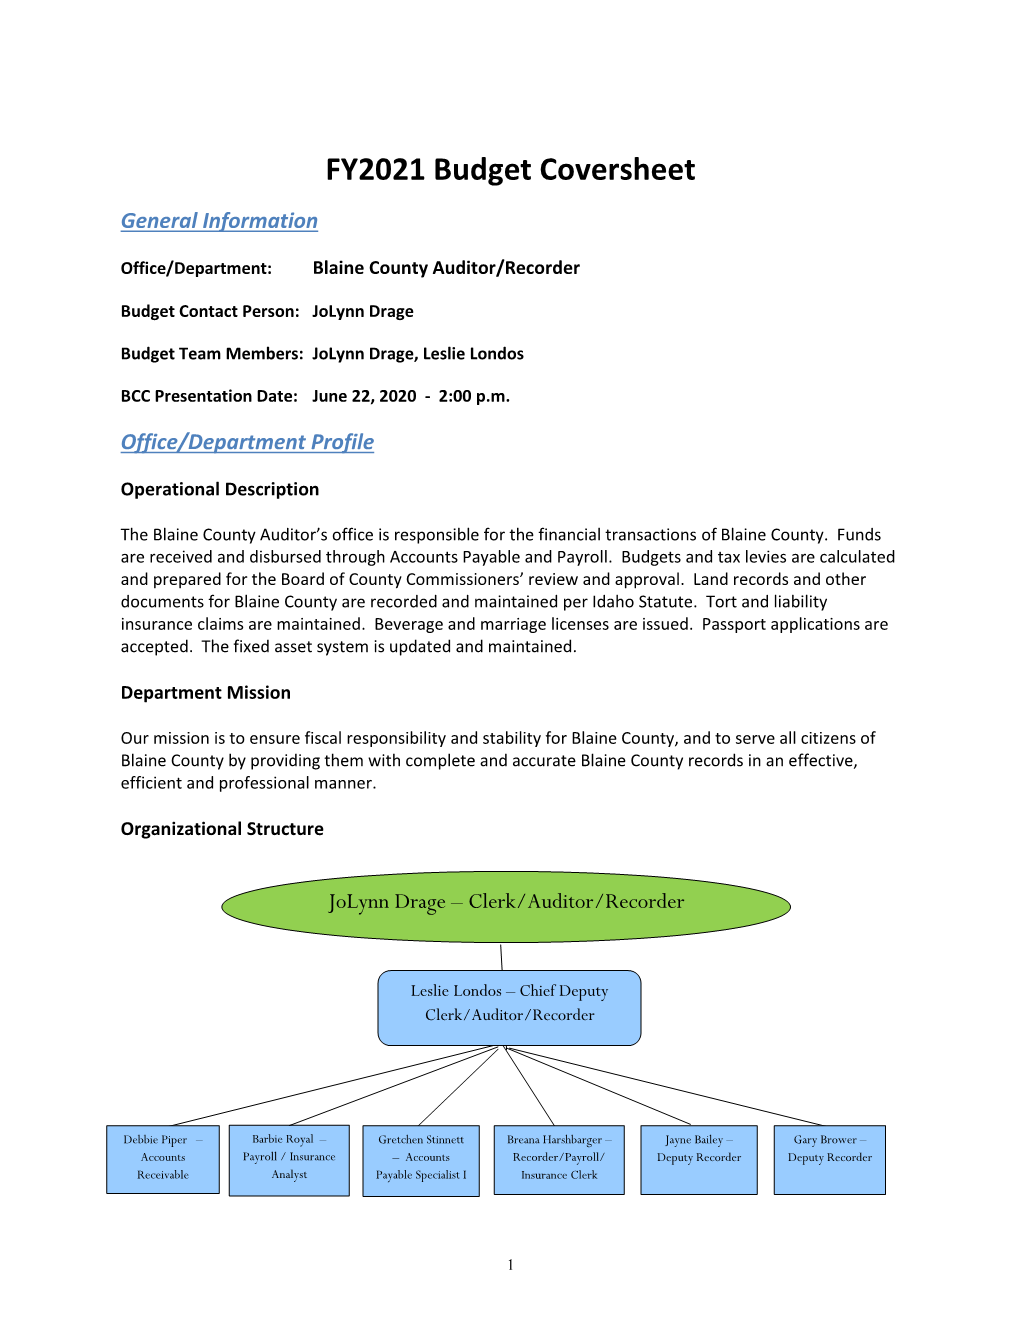 FY2021 Budget Coversheet General Information